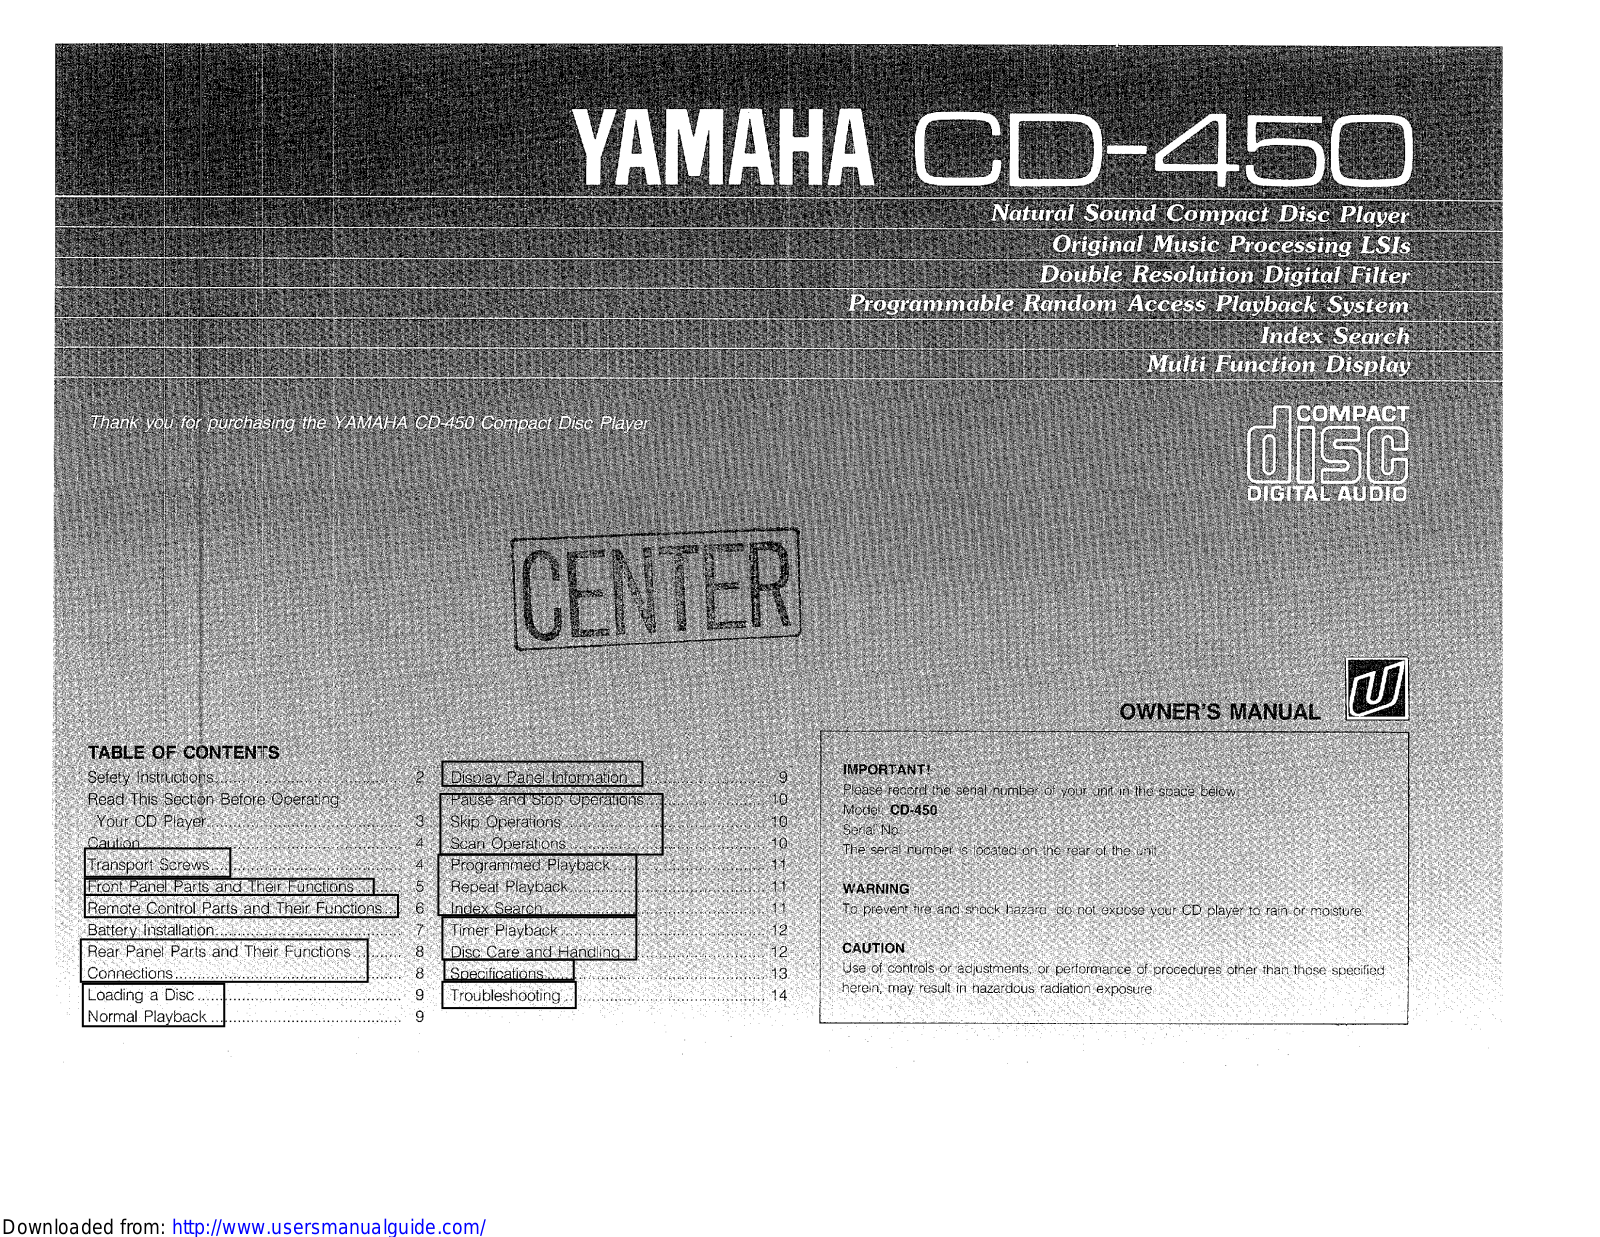 Yamaha Audio CD-450 User Manual